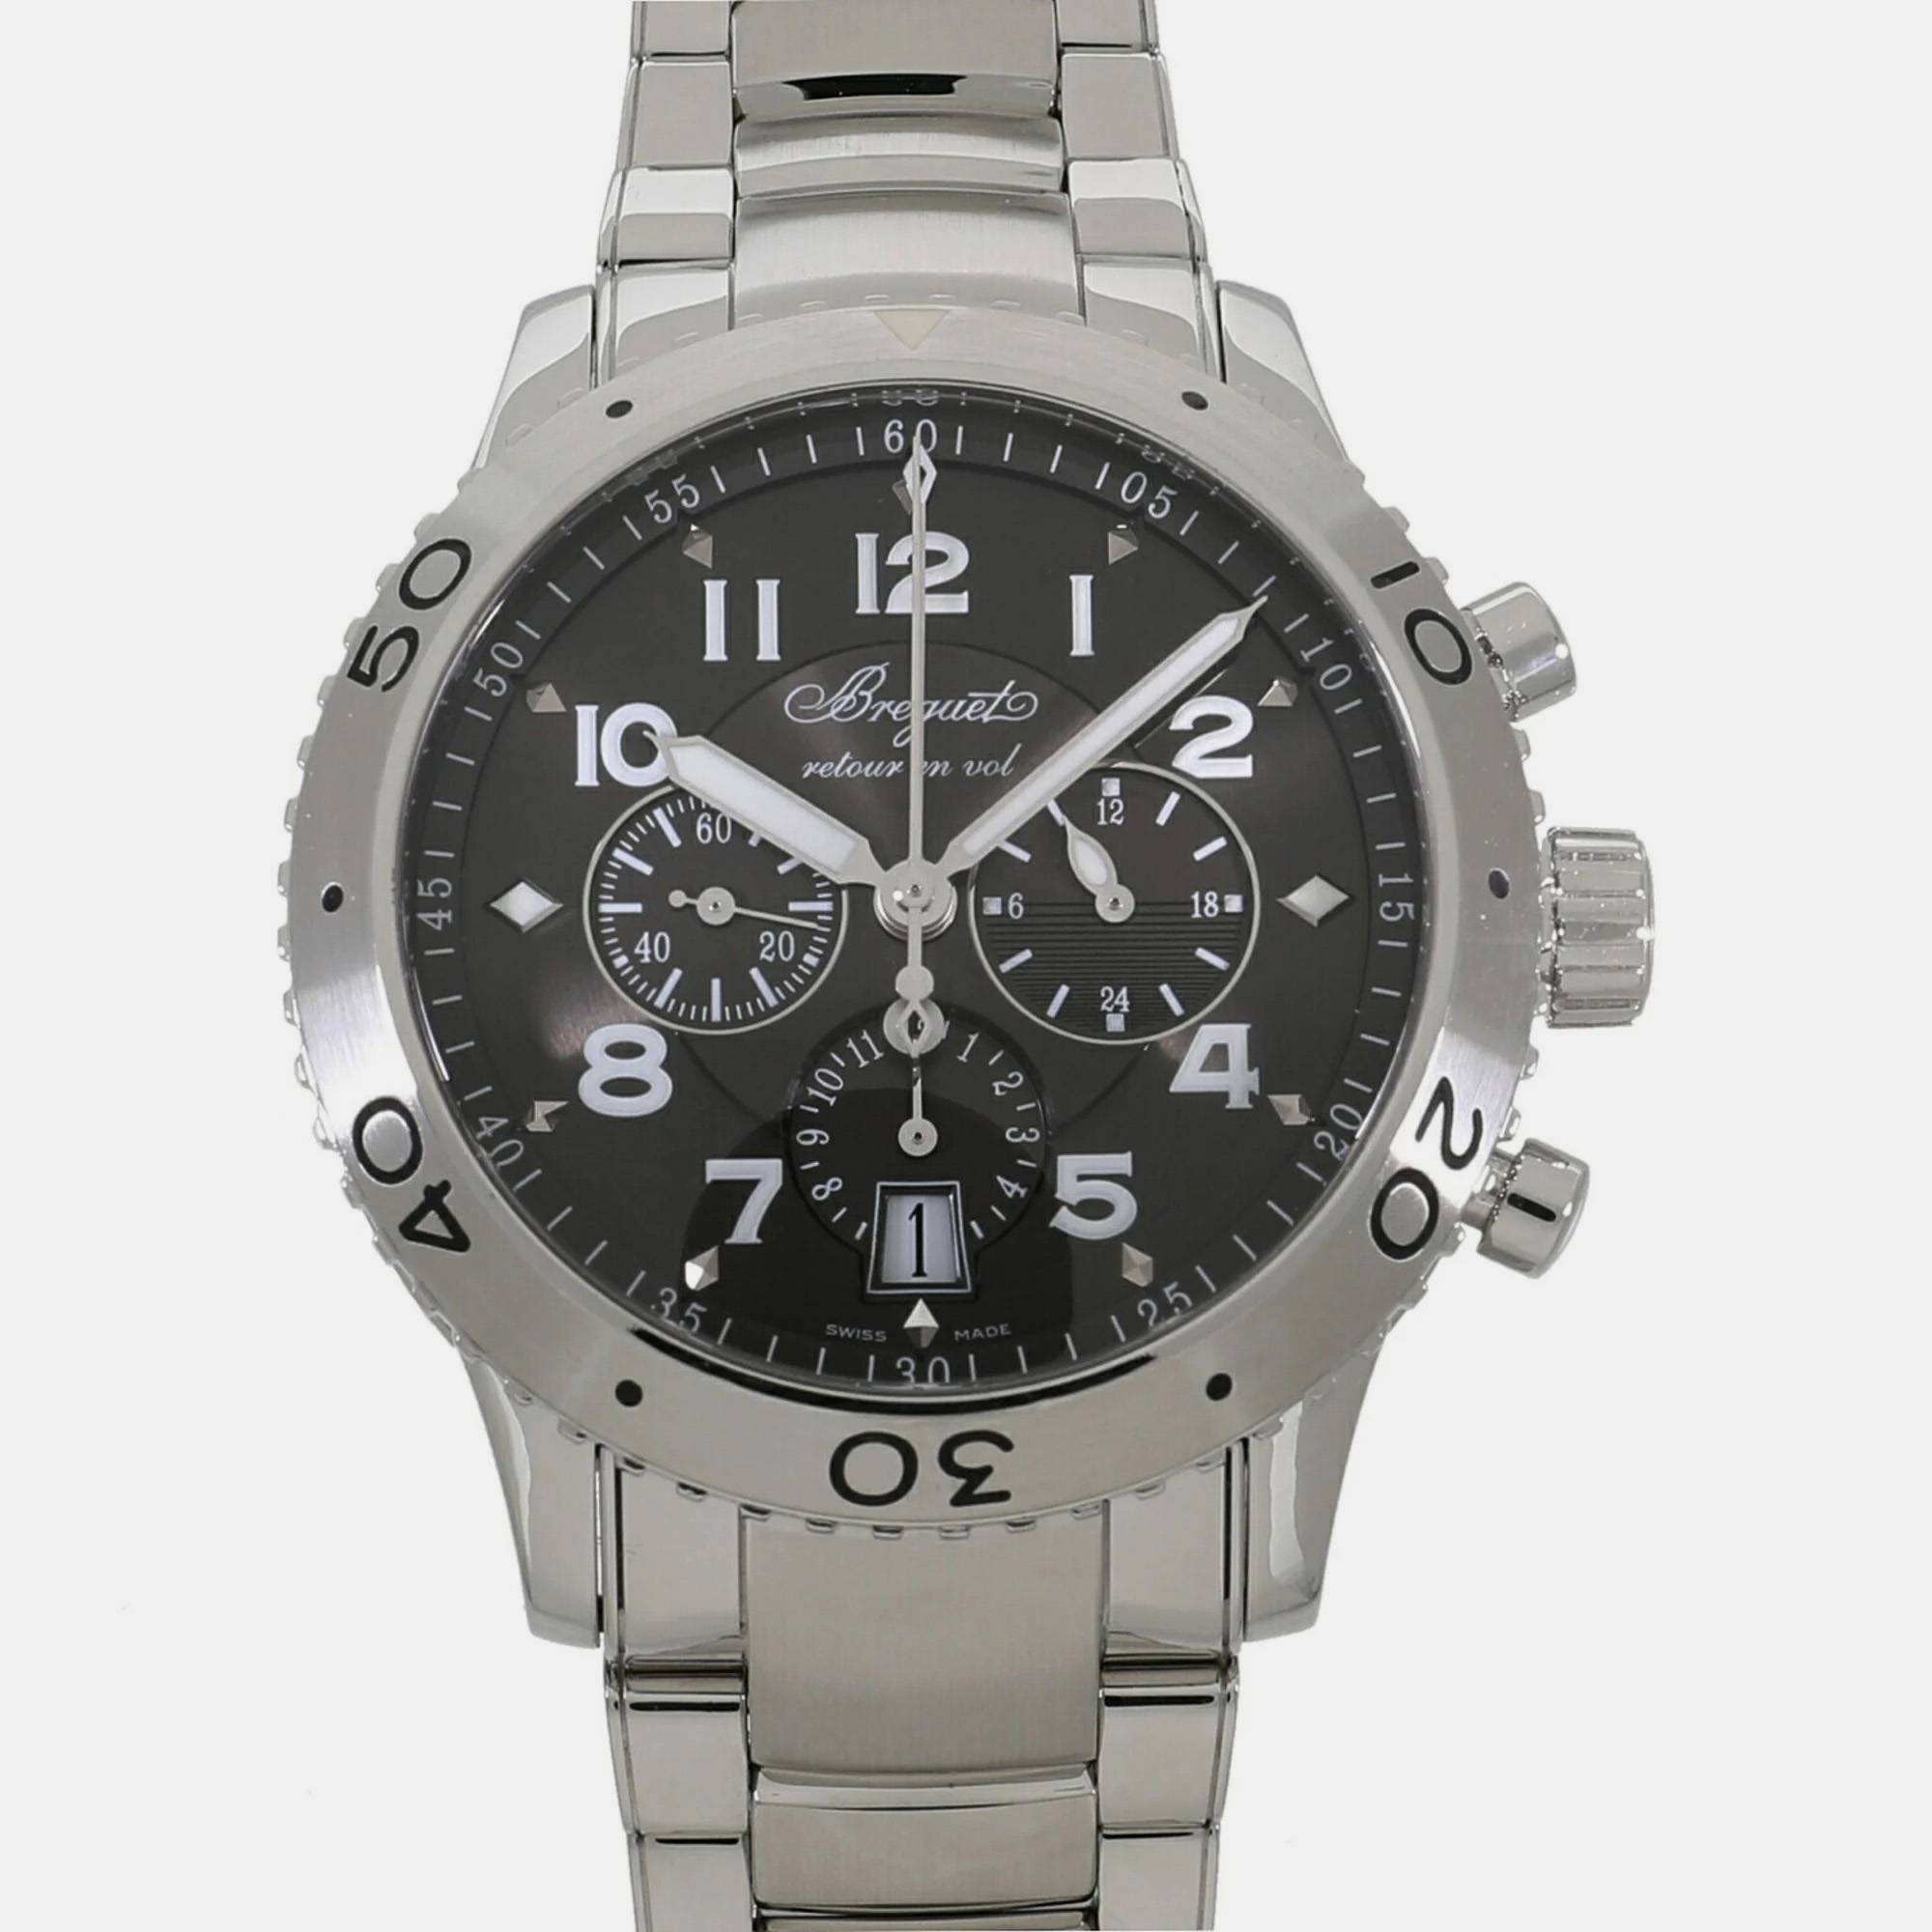 Breguet gray  stainless steel type xxi 3810st men's watch 42mm